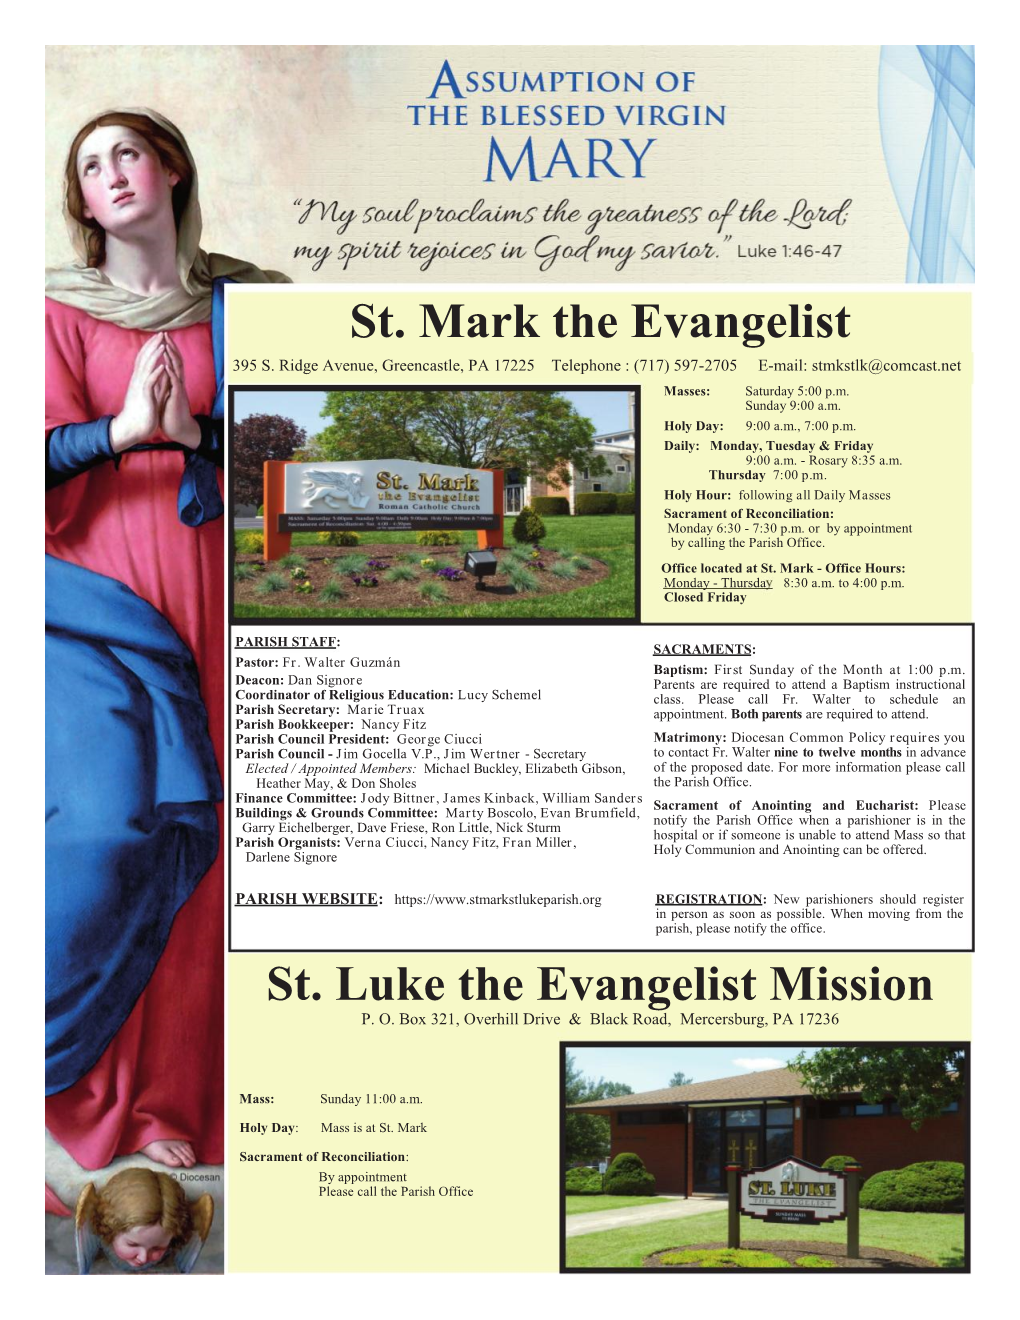 St. Mark the Evangelist St. Luke the Evangelist Mission